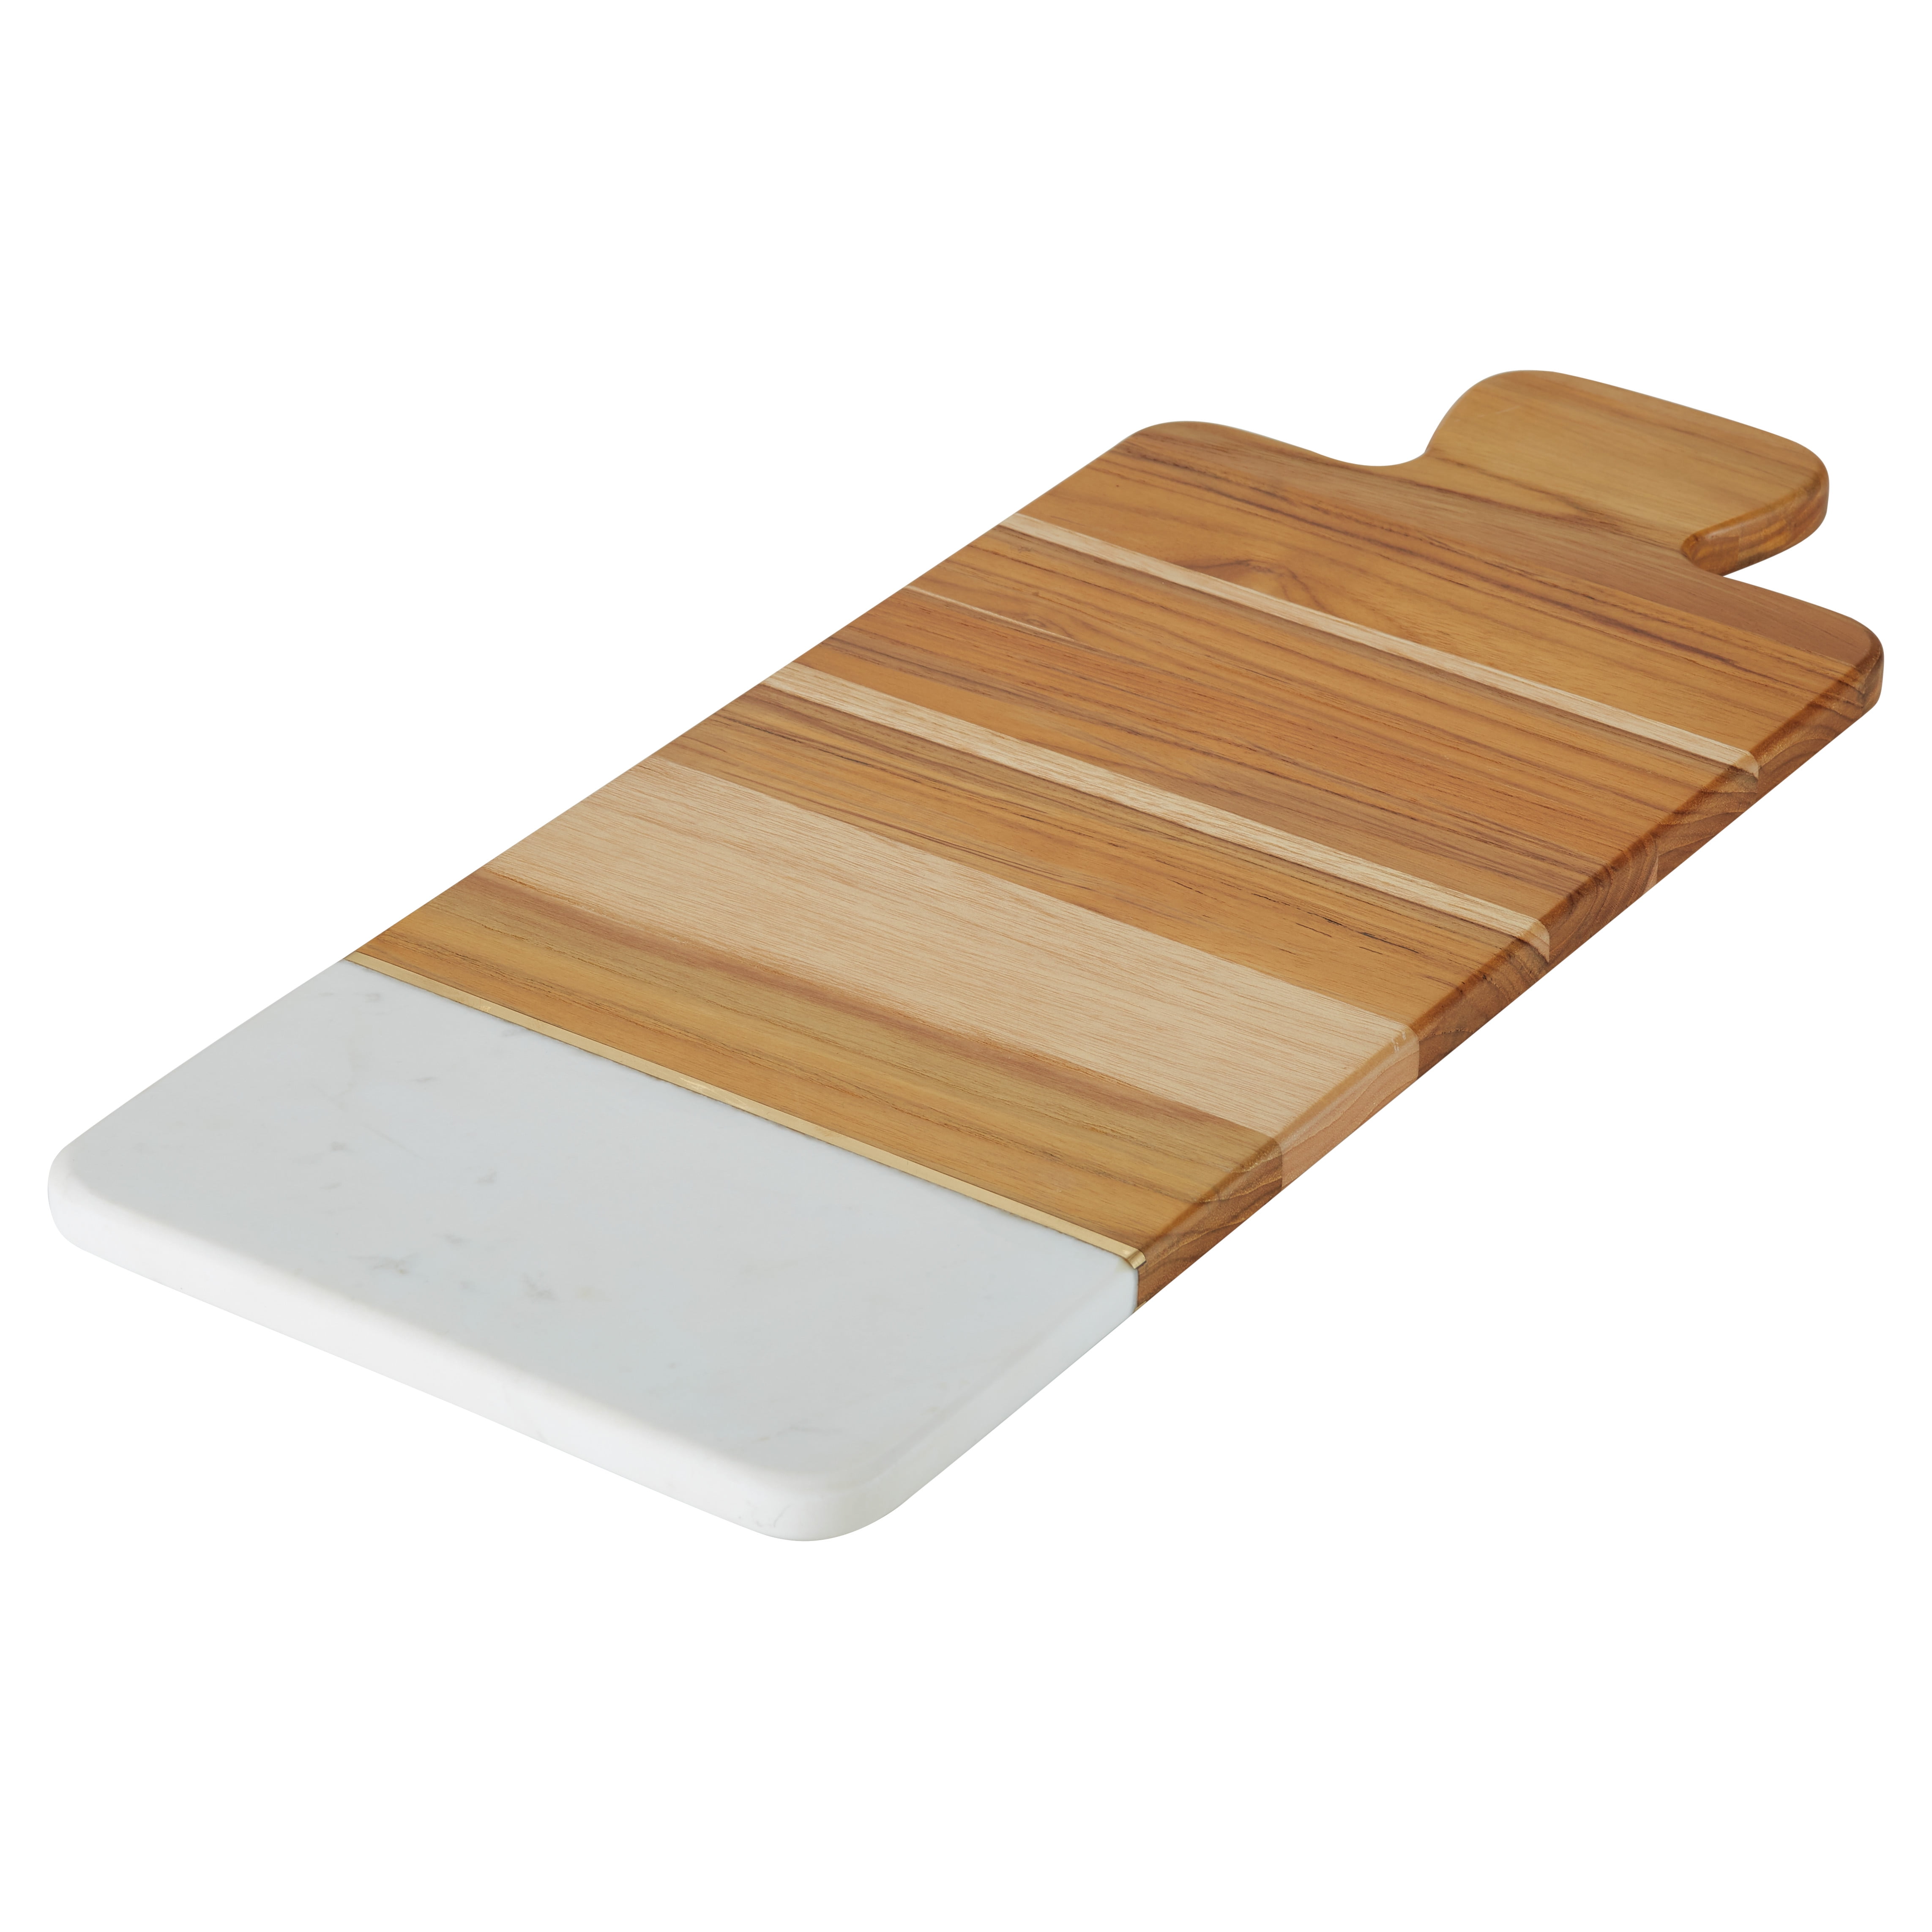 20 in. x 15 in. Rectangular Teak Wood Reversible Chopping Serving Board Cutting Board